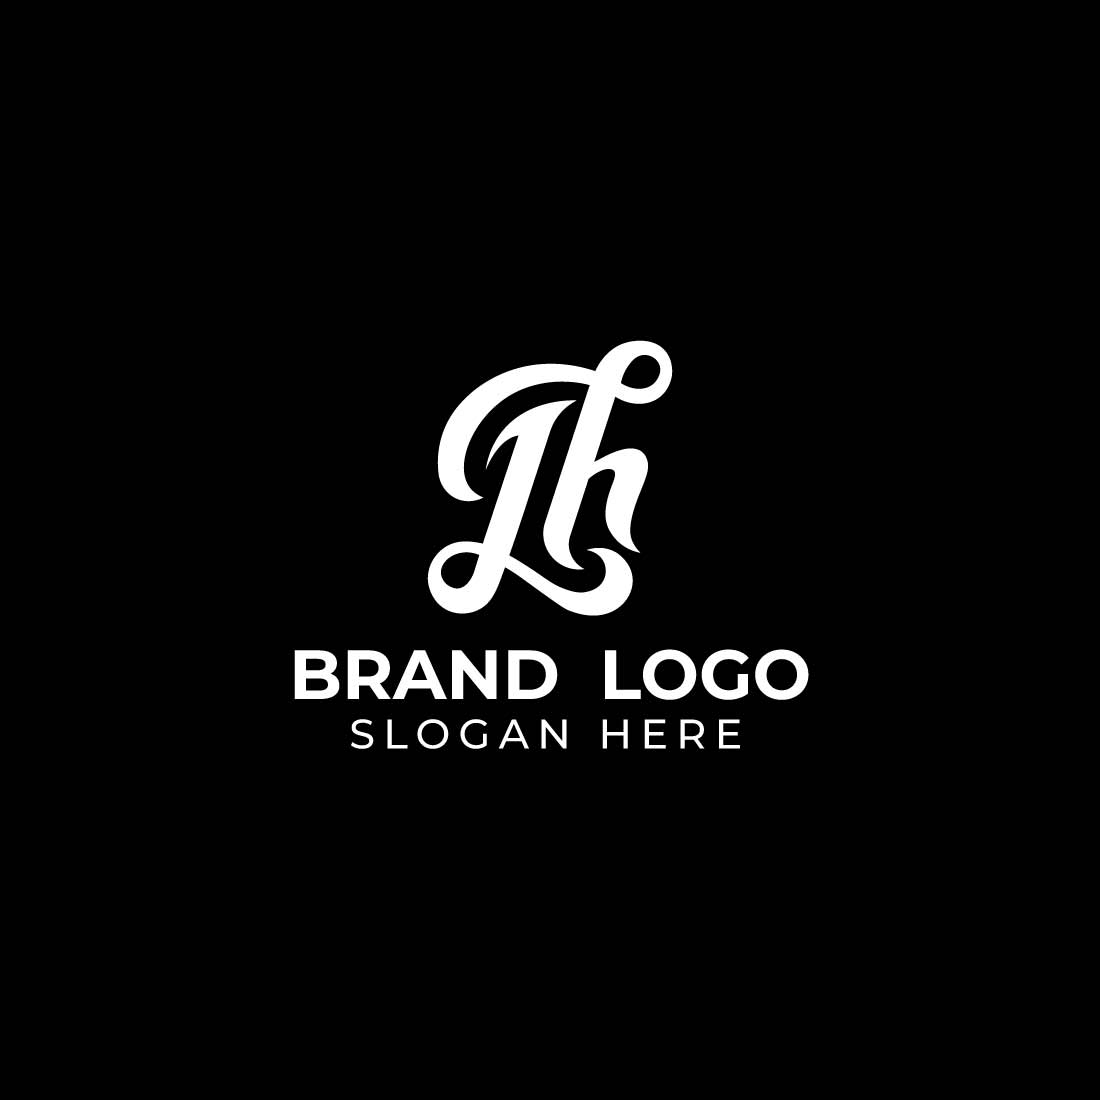 Professional Letter LH logo design cover image.